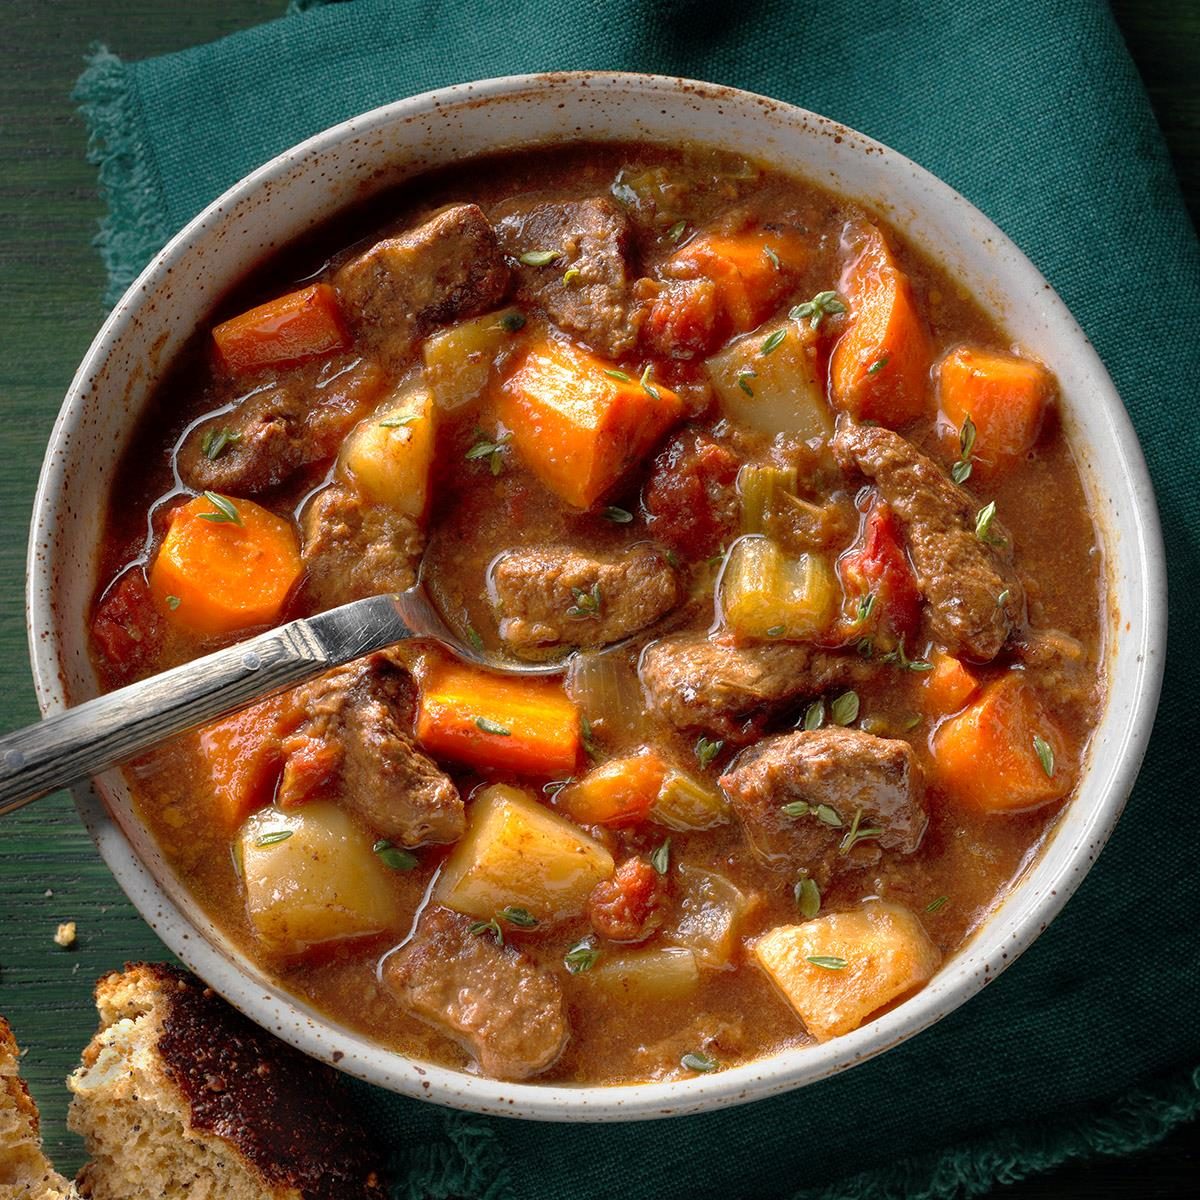 Crock-Pot 4.5 quart slow cooker - Making beef stew [unboxing] 